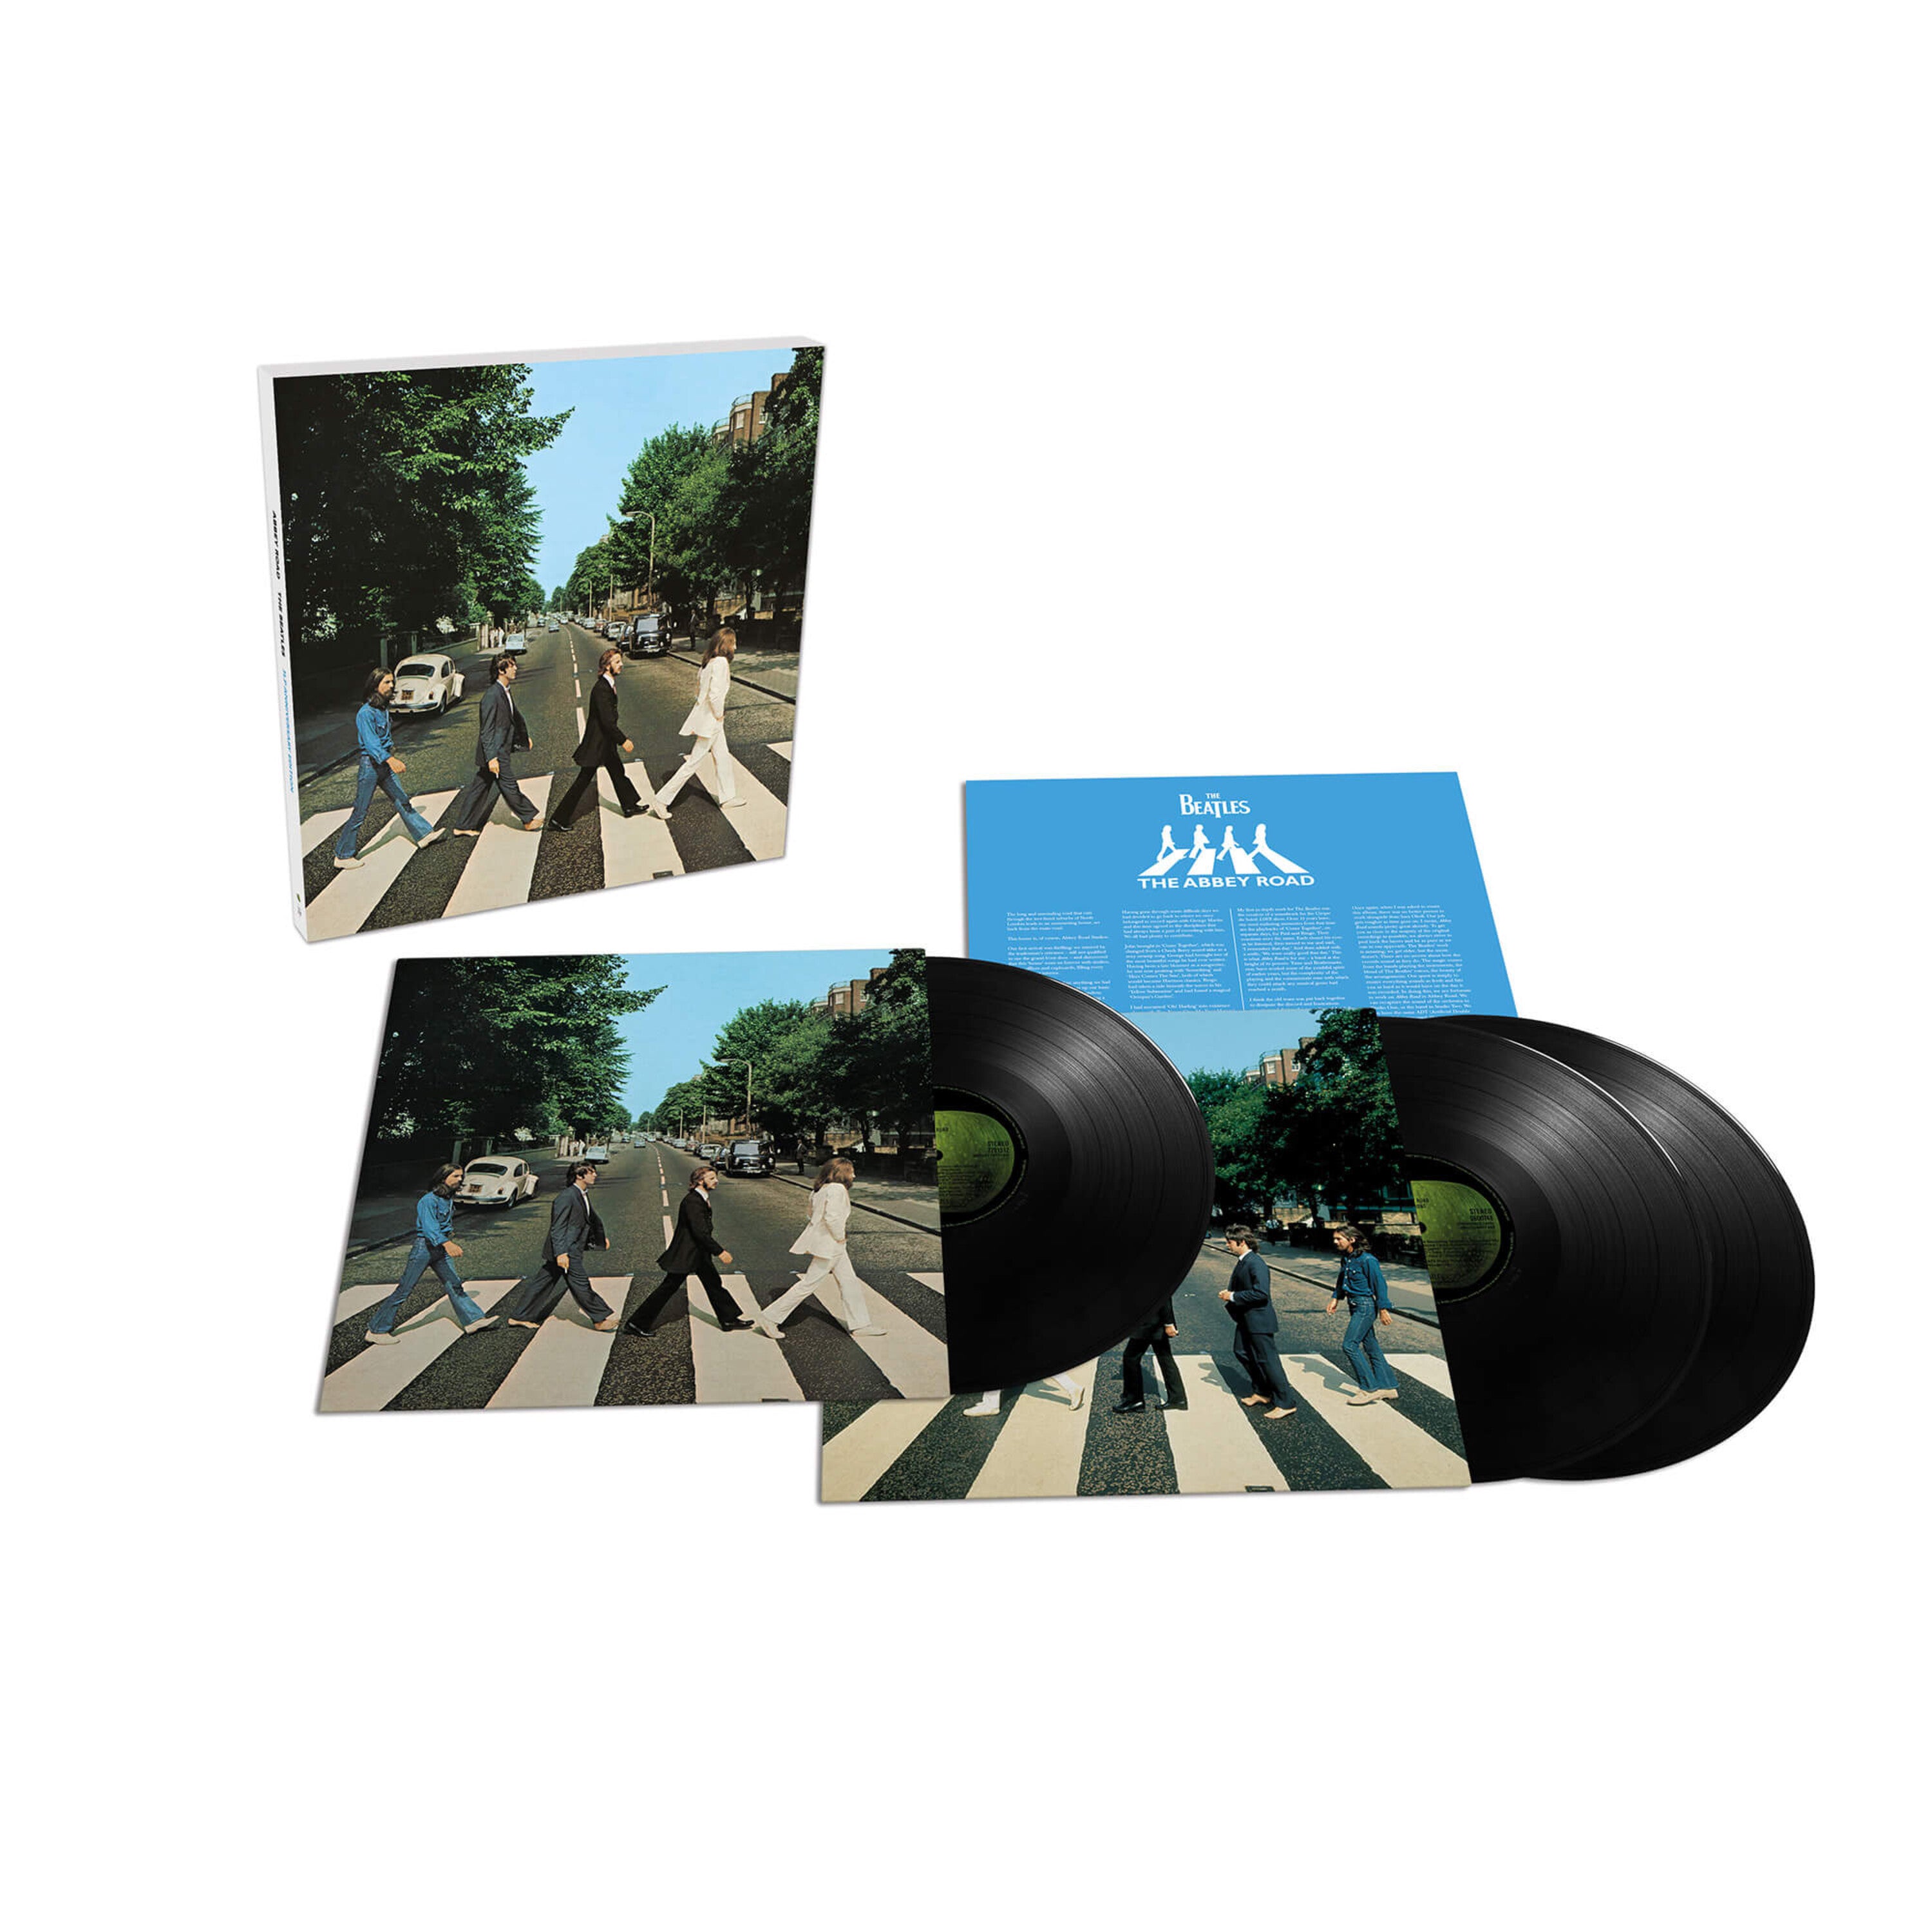 https://images.bravado.de/prod/product-assets/product-asset-data/beatles-the/the-beatles-international-1/products/130644/web/354216/image-thumb__354216__3000x3000_original/The-Beatles-Abbey-Road-Anniversary-Edition-Ltd-3LP-Box-Vinyl-Box-130644-354216.jpg